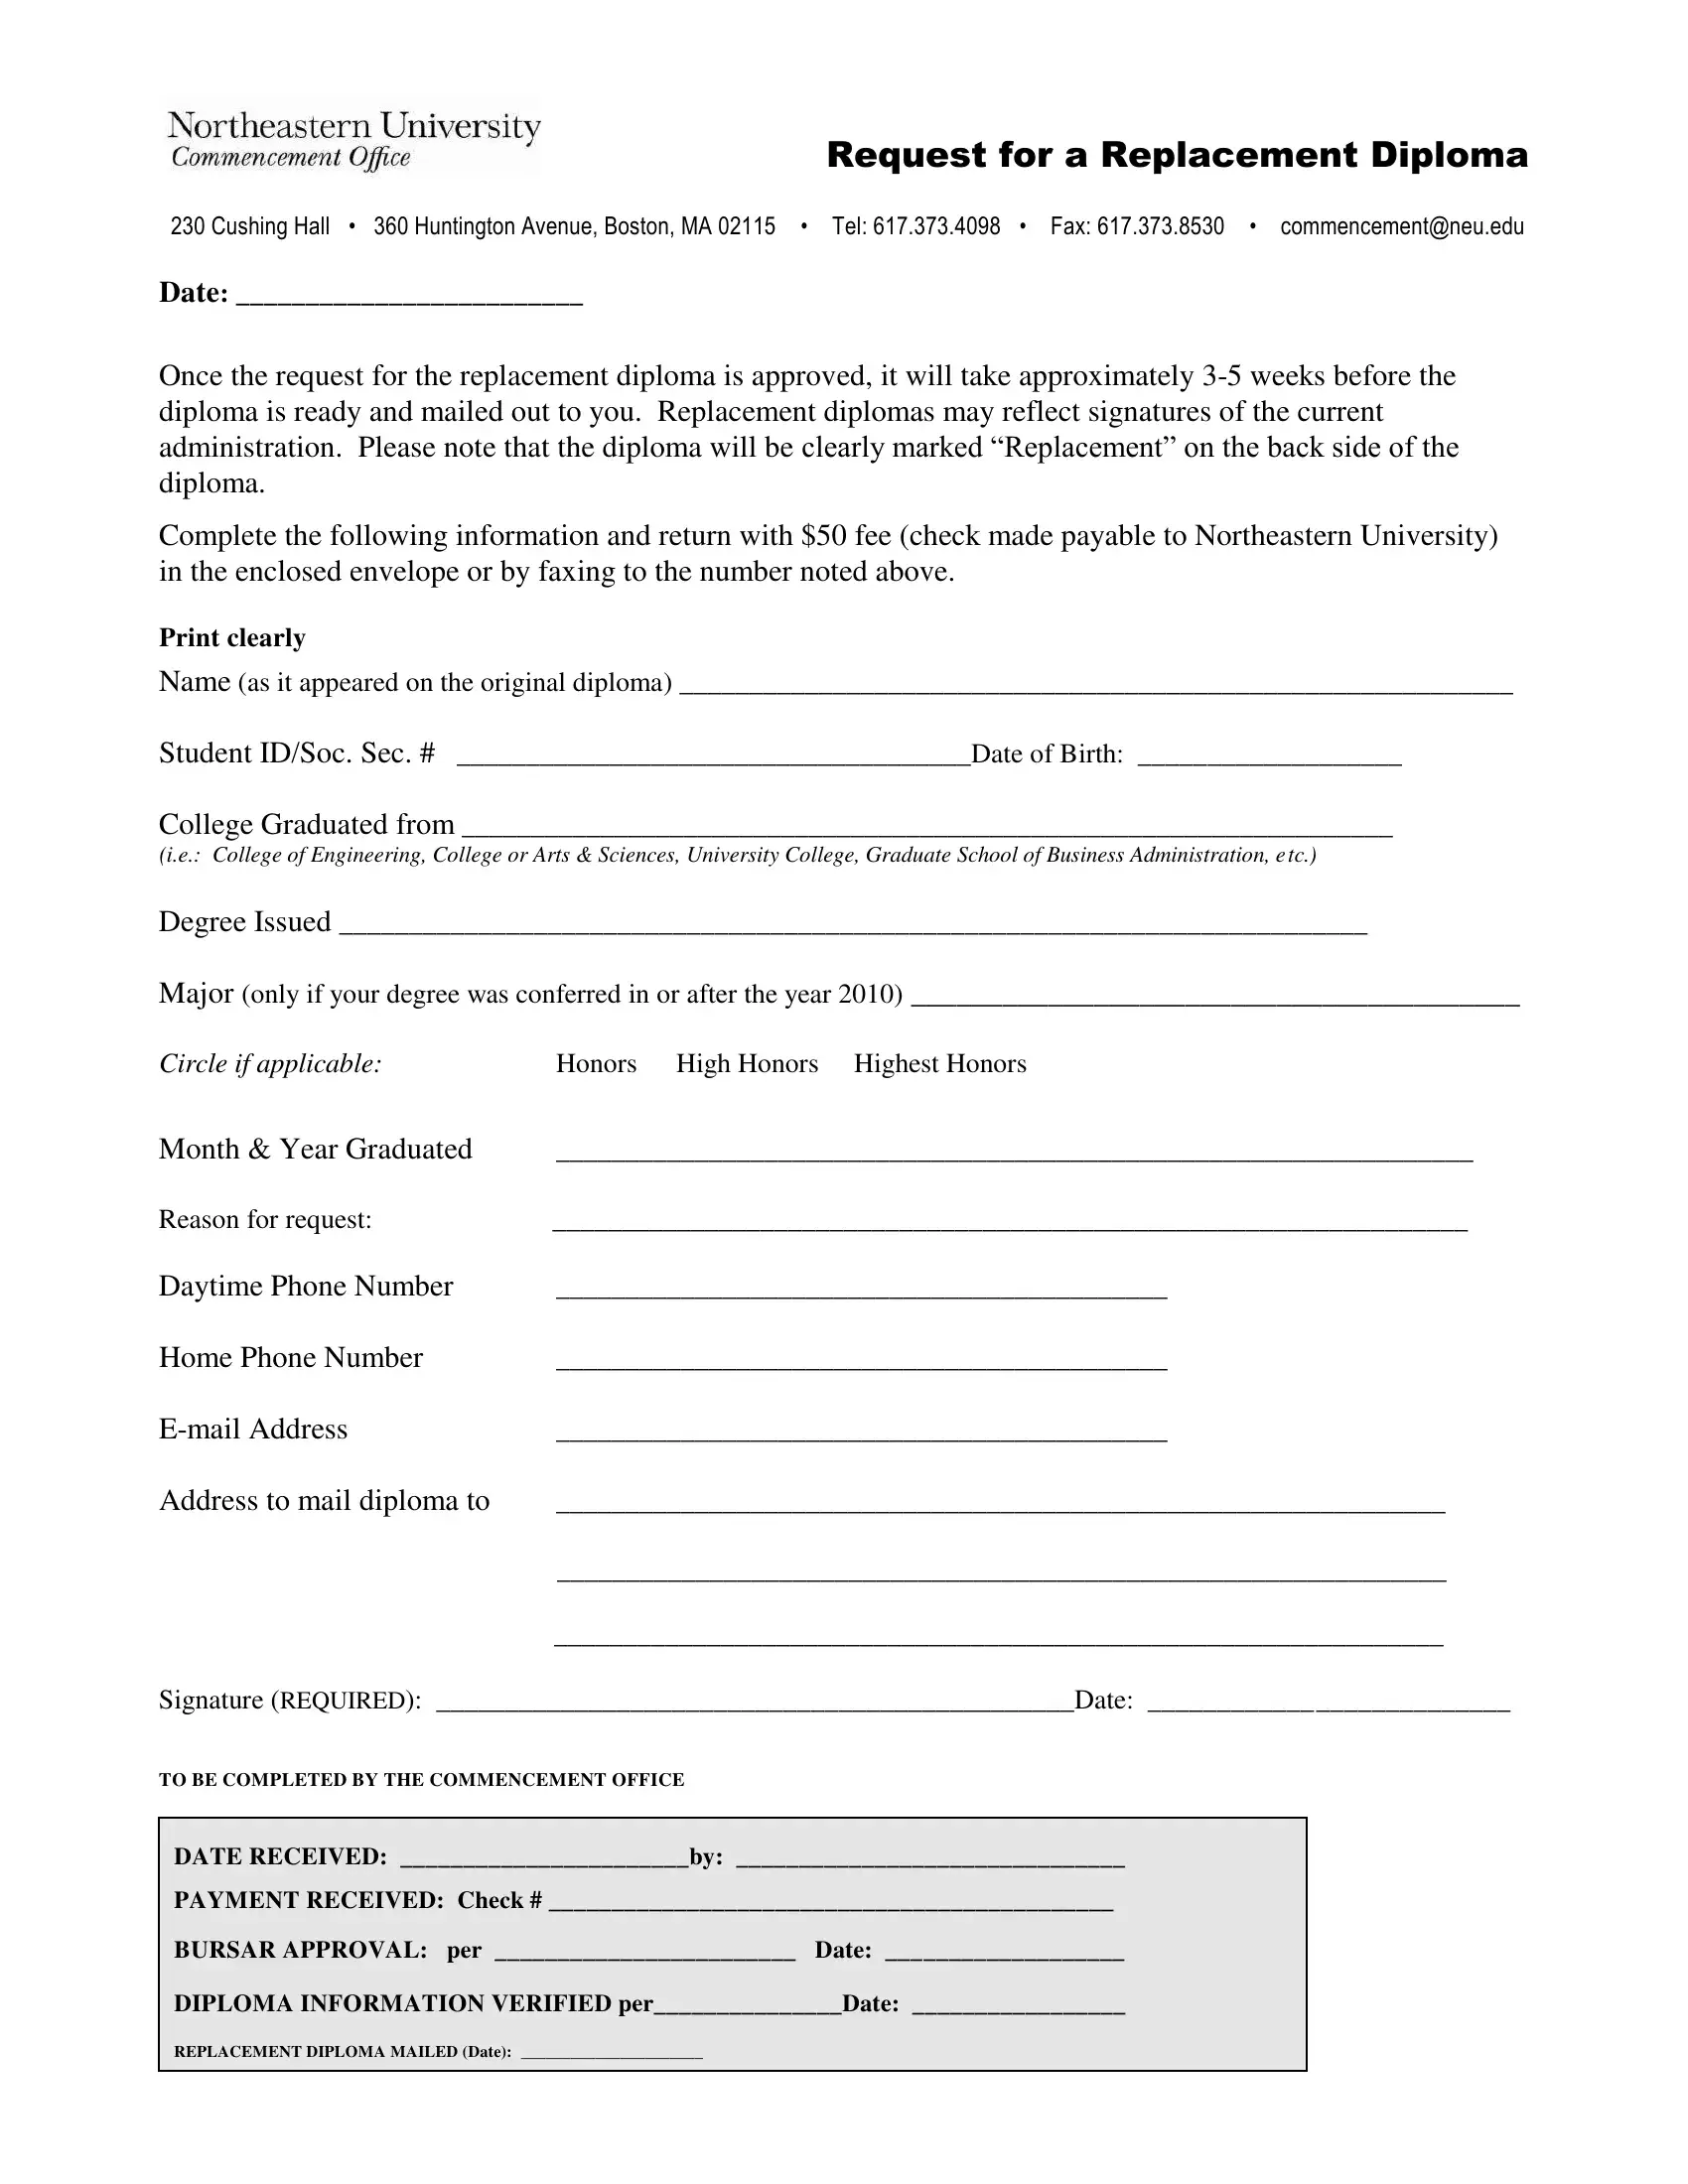 northeastern-university-request-diploma-pdf-form-formspal